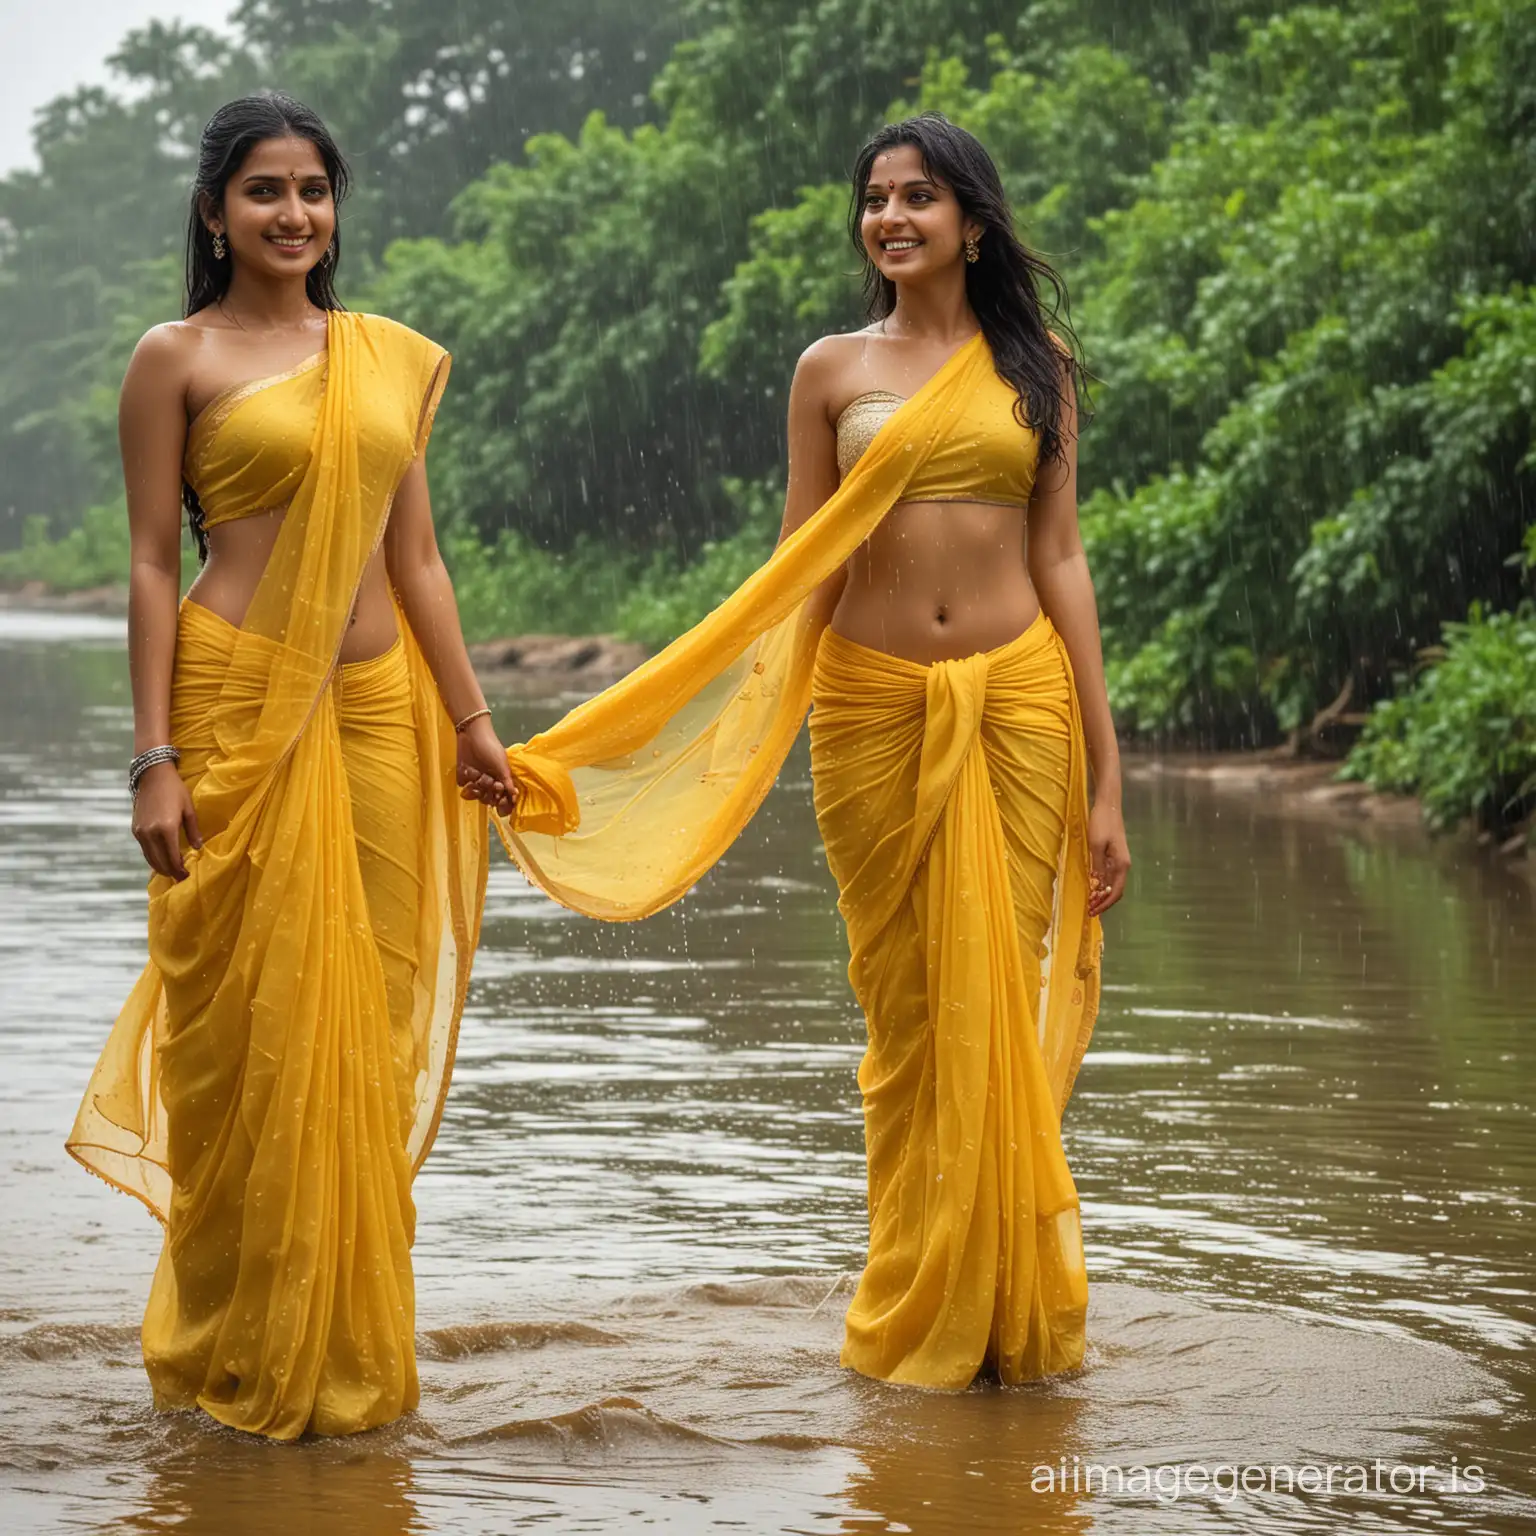 Indian-Models-in-Yellow-Chiffon-Sarees-Enjoying-Riverside-Rain